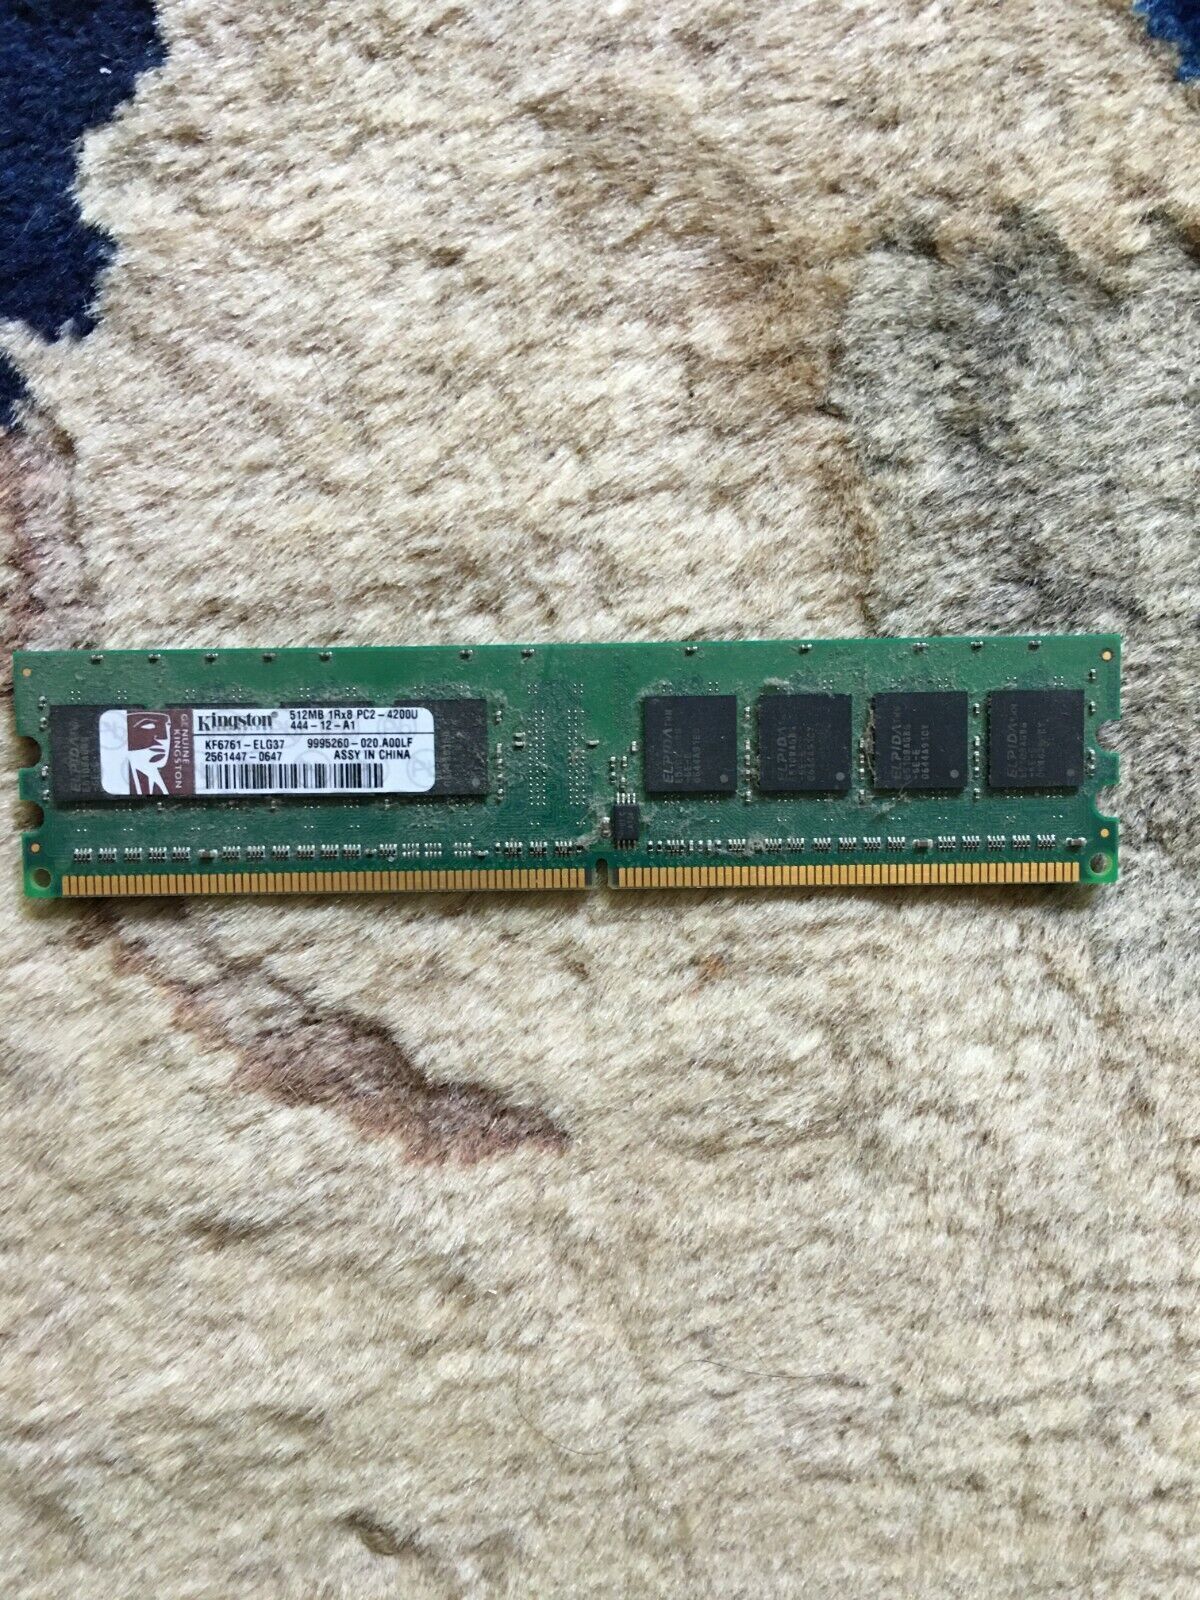 KINGSTON 512MB PC2 4200U-444-12-A1 SDRAM (KF6761-ELG37) DESKTOP RAM Memory